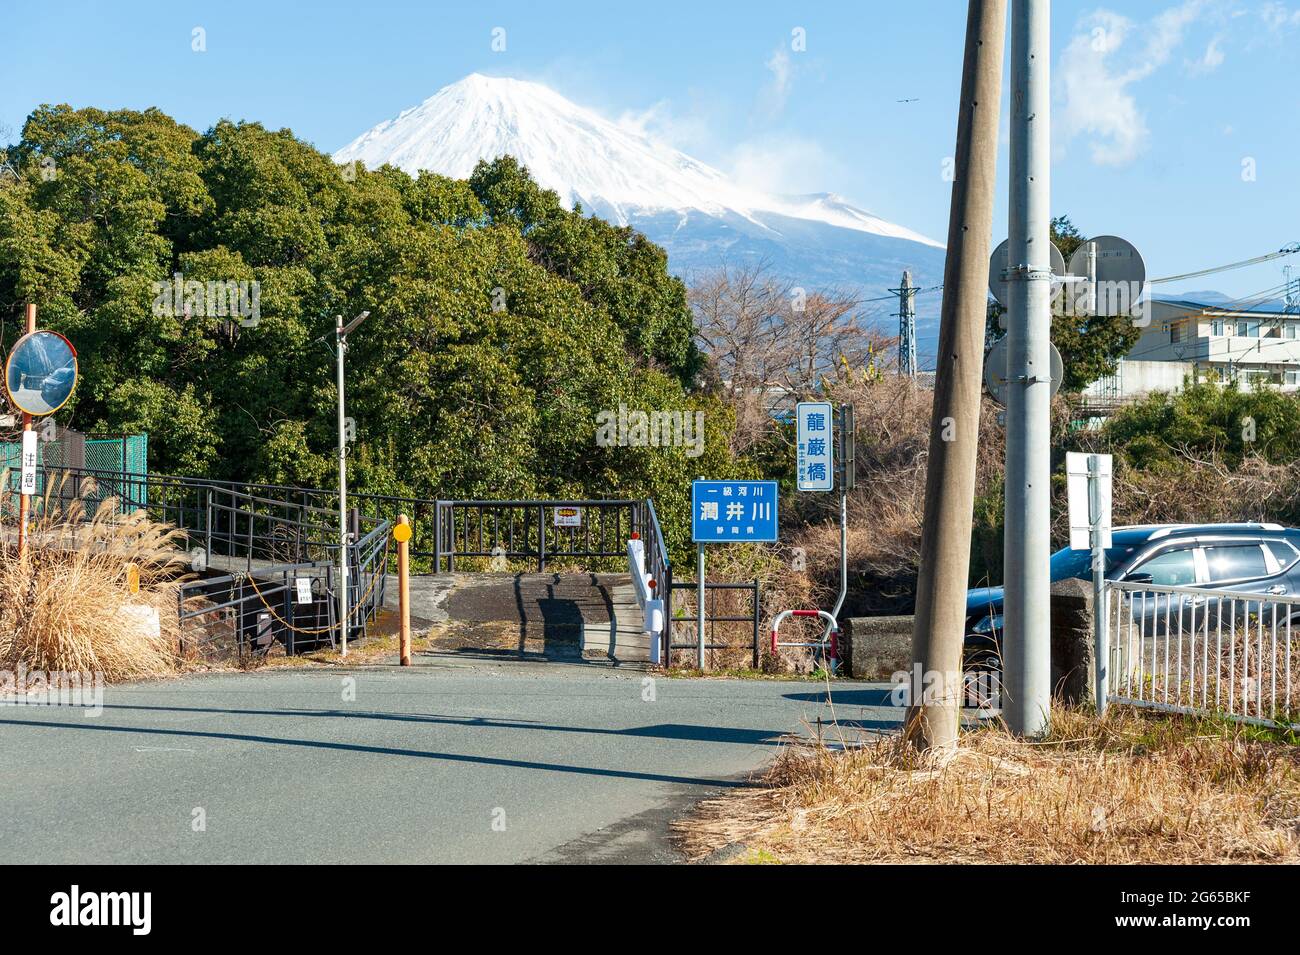 City boundary between Fuji and Fujinomiya, Shizuoka prefecture, Japan. Background with Mount Fuji. Horizontal shot. Stock Photo